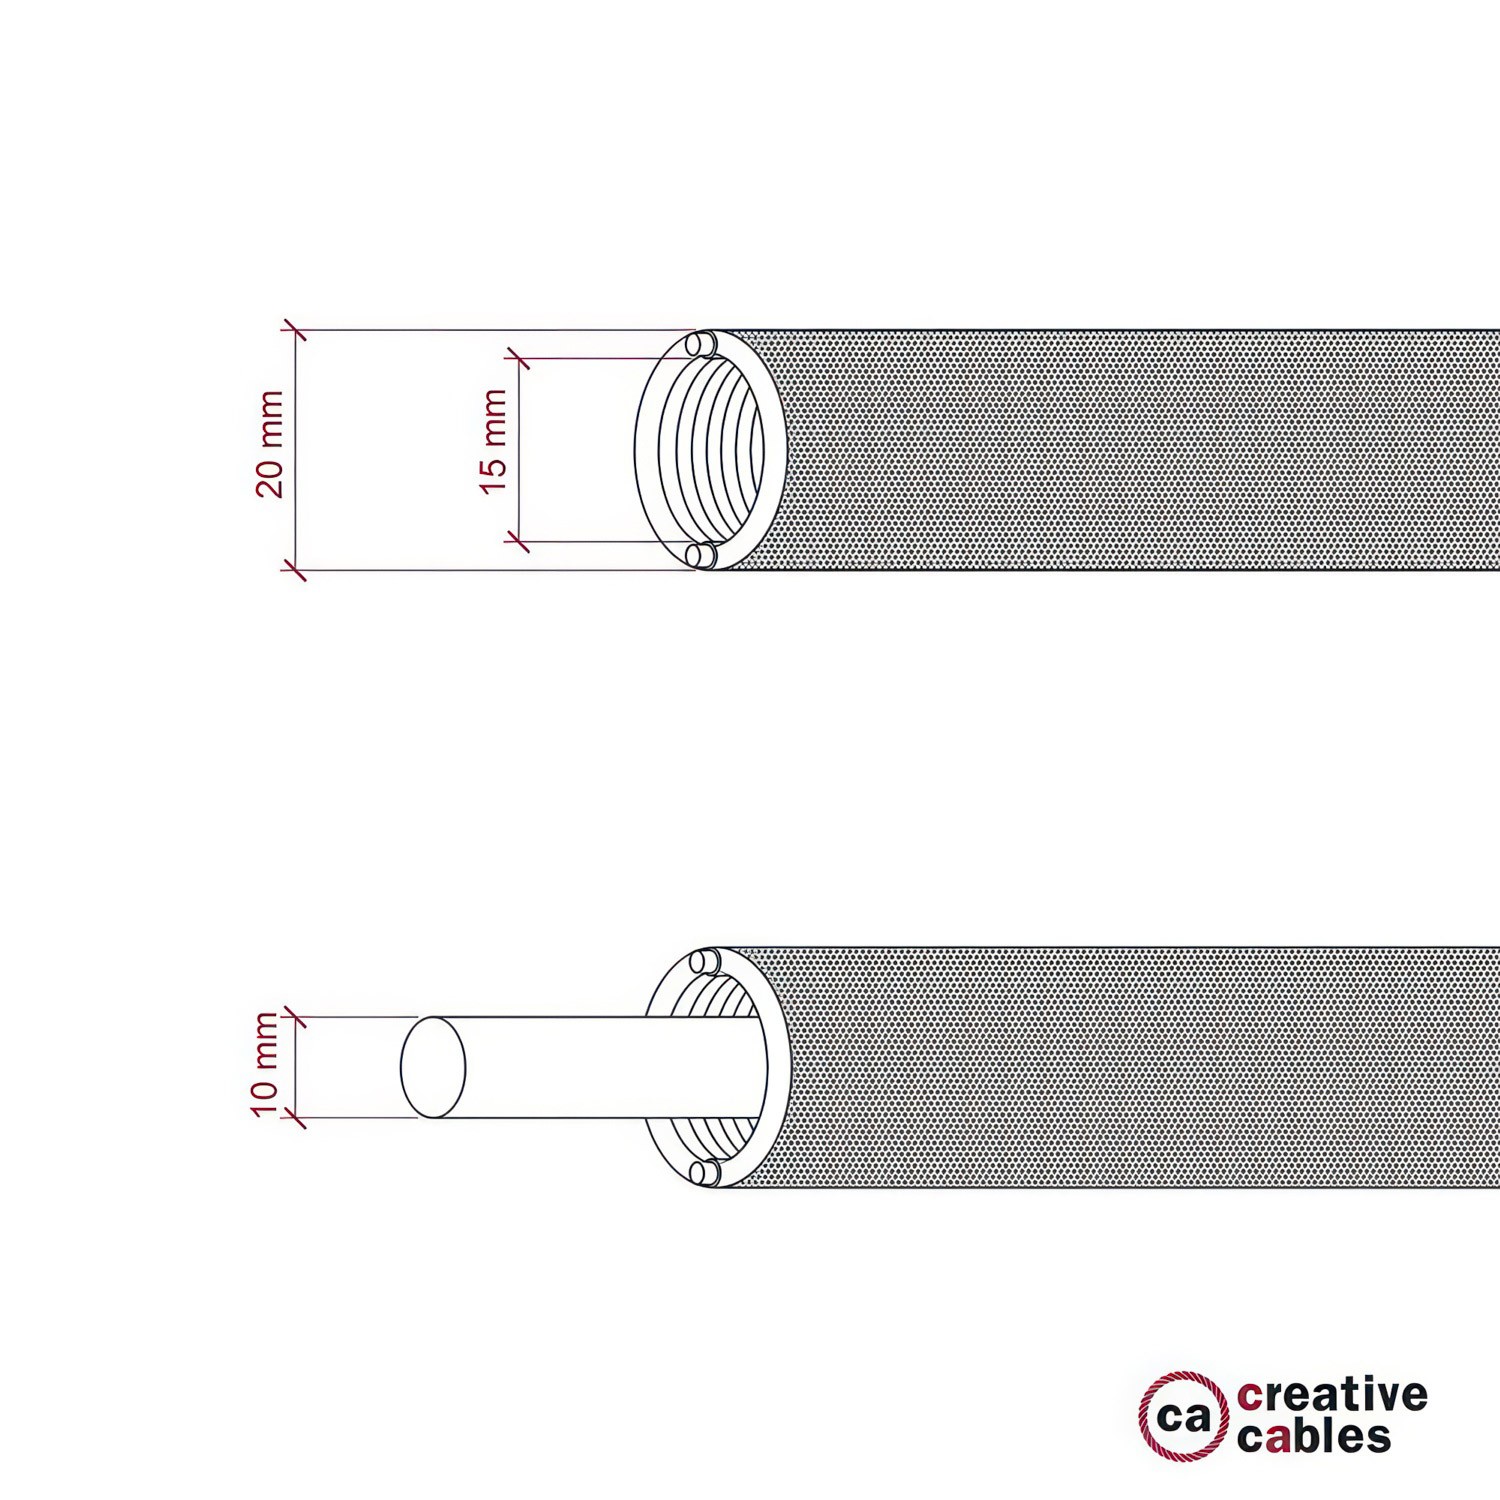 Design flexibele elektrabuis met jute stof omweven - Creative-Tube Jute RN06 20mm